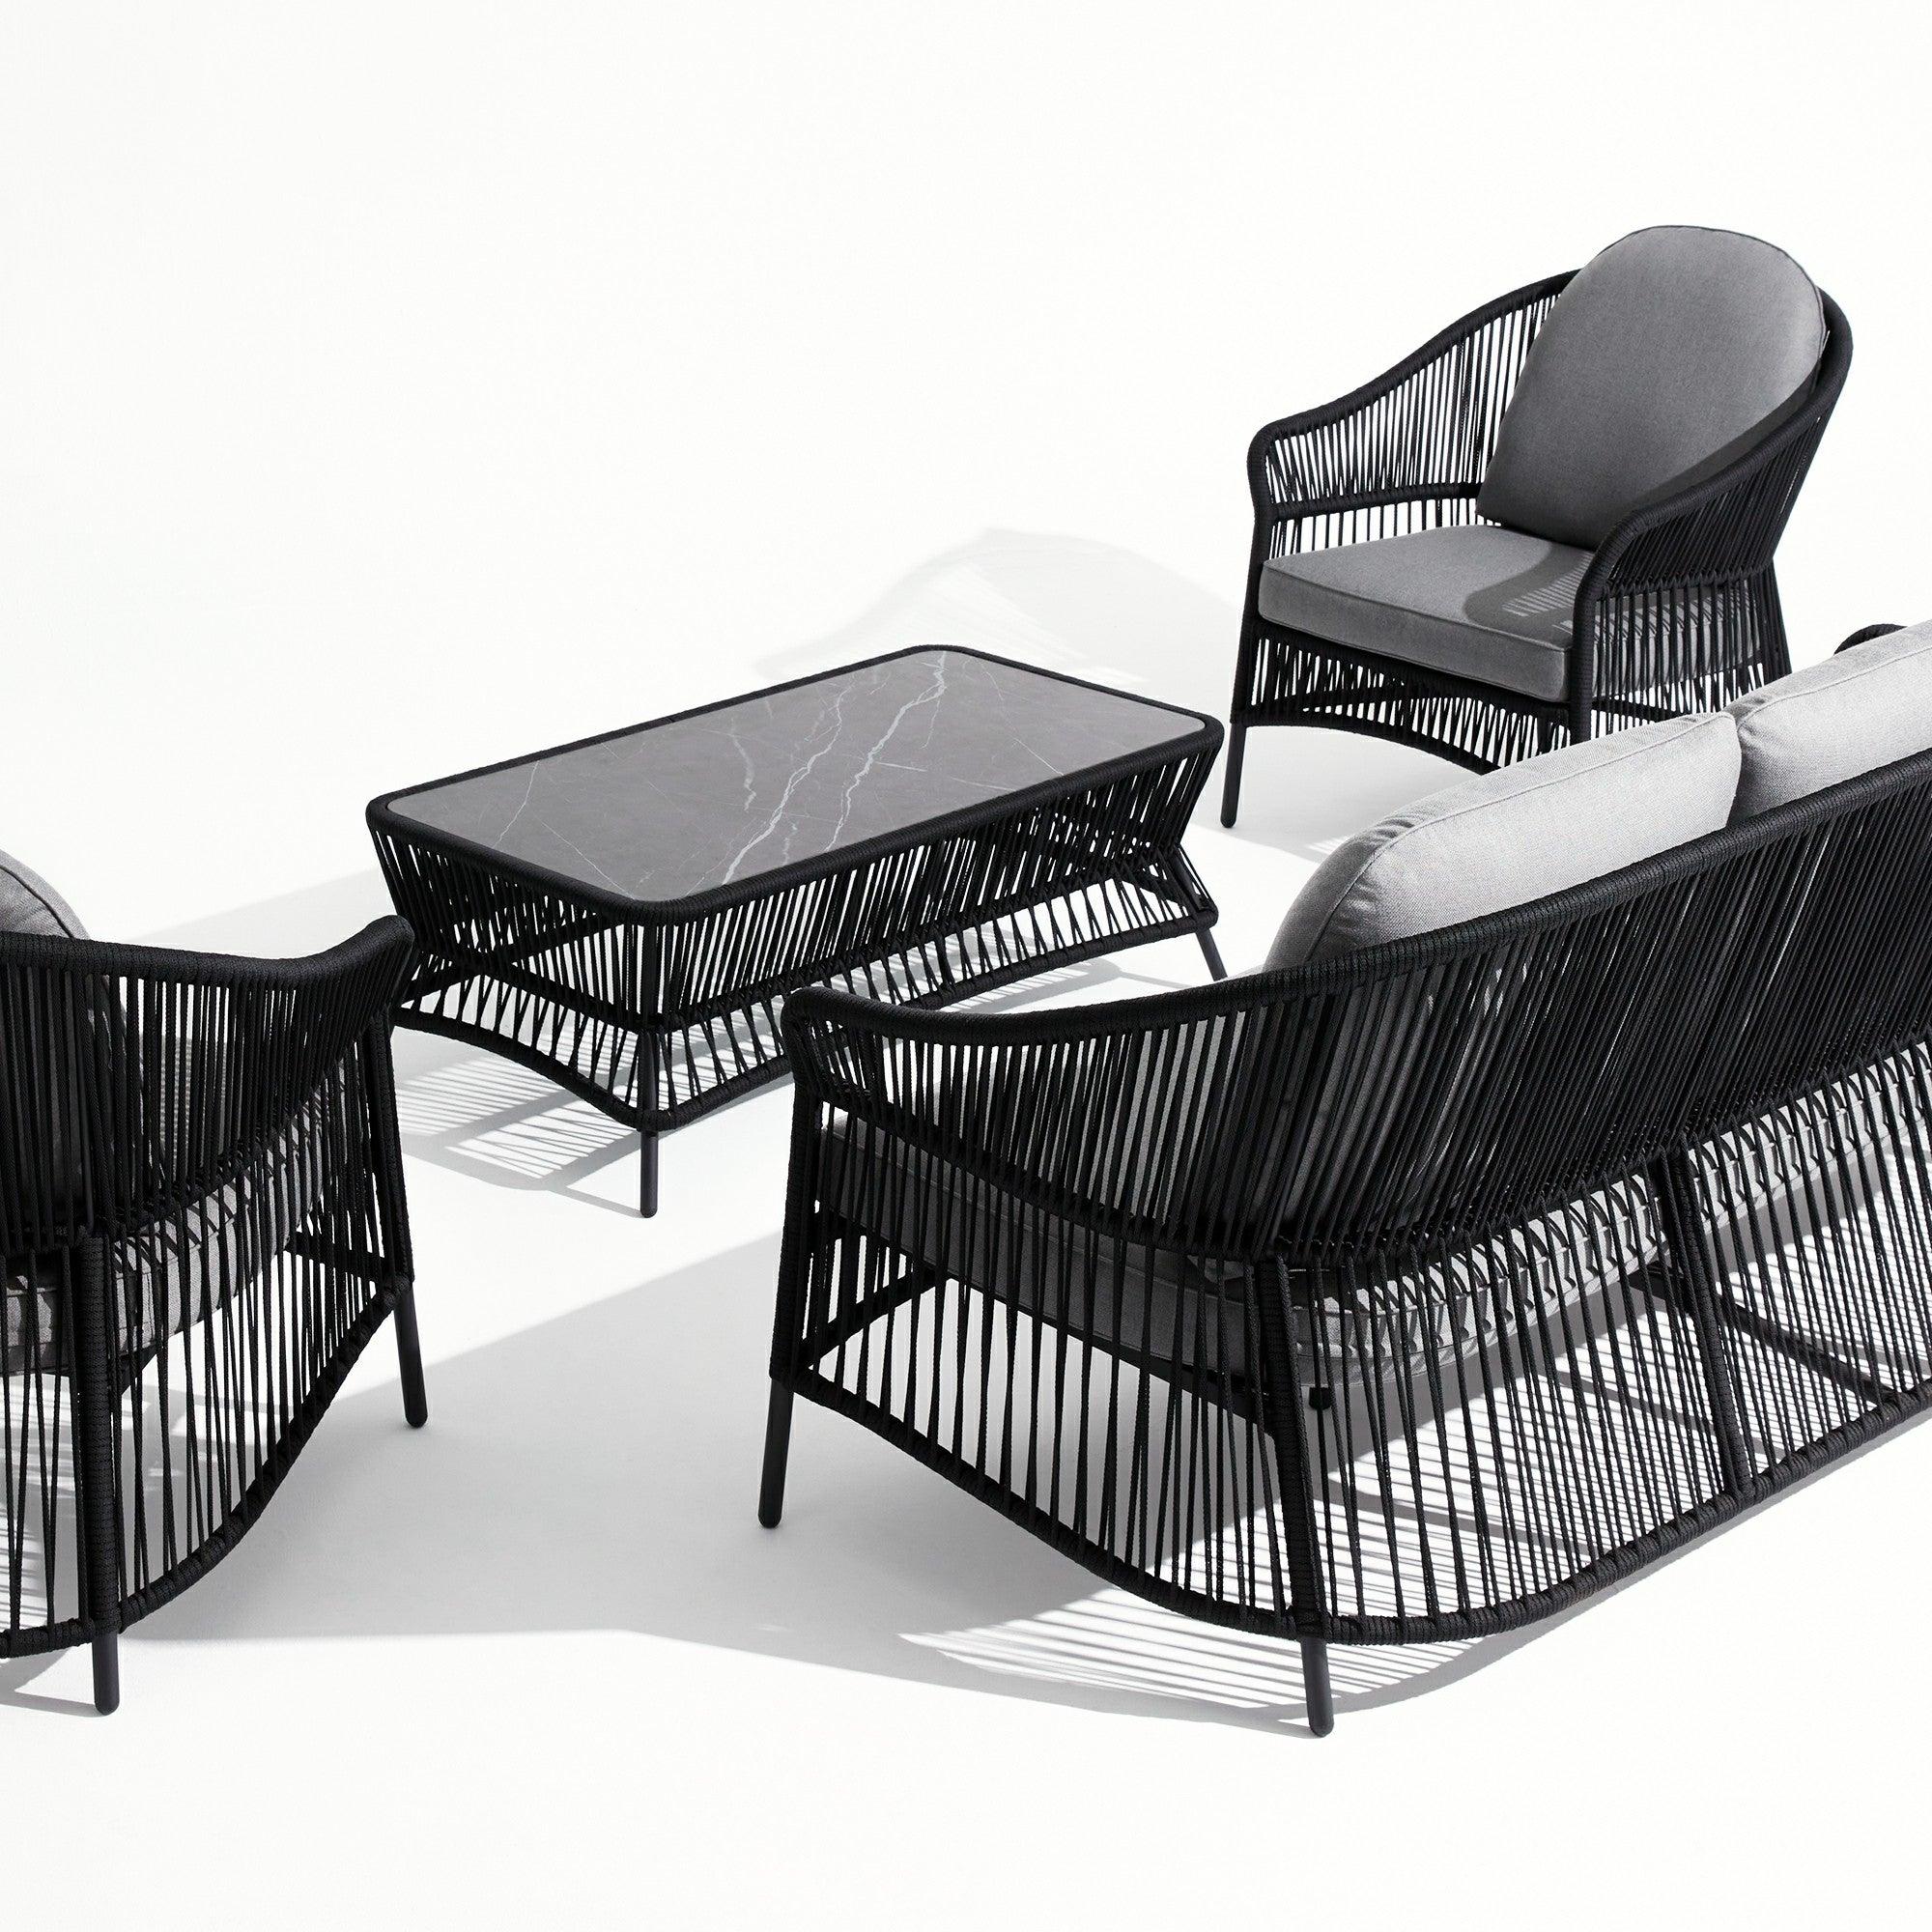 Wonder - Sofa Set，1 3-seater sofa, 2 lounge chairs,1 coffee table,black rope design, grey & Soft cushion,aluminum frame,white background, back view-Sunsitt Signature